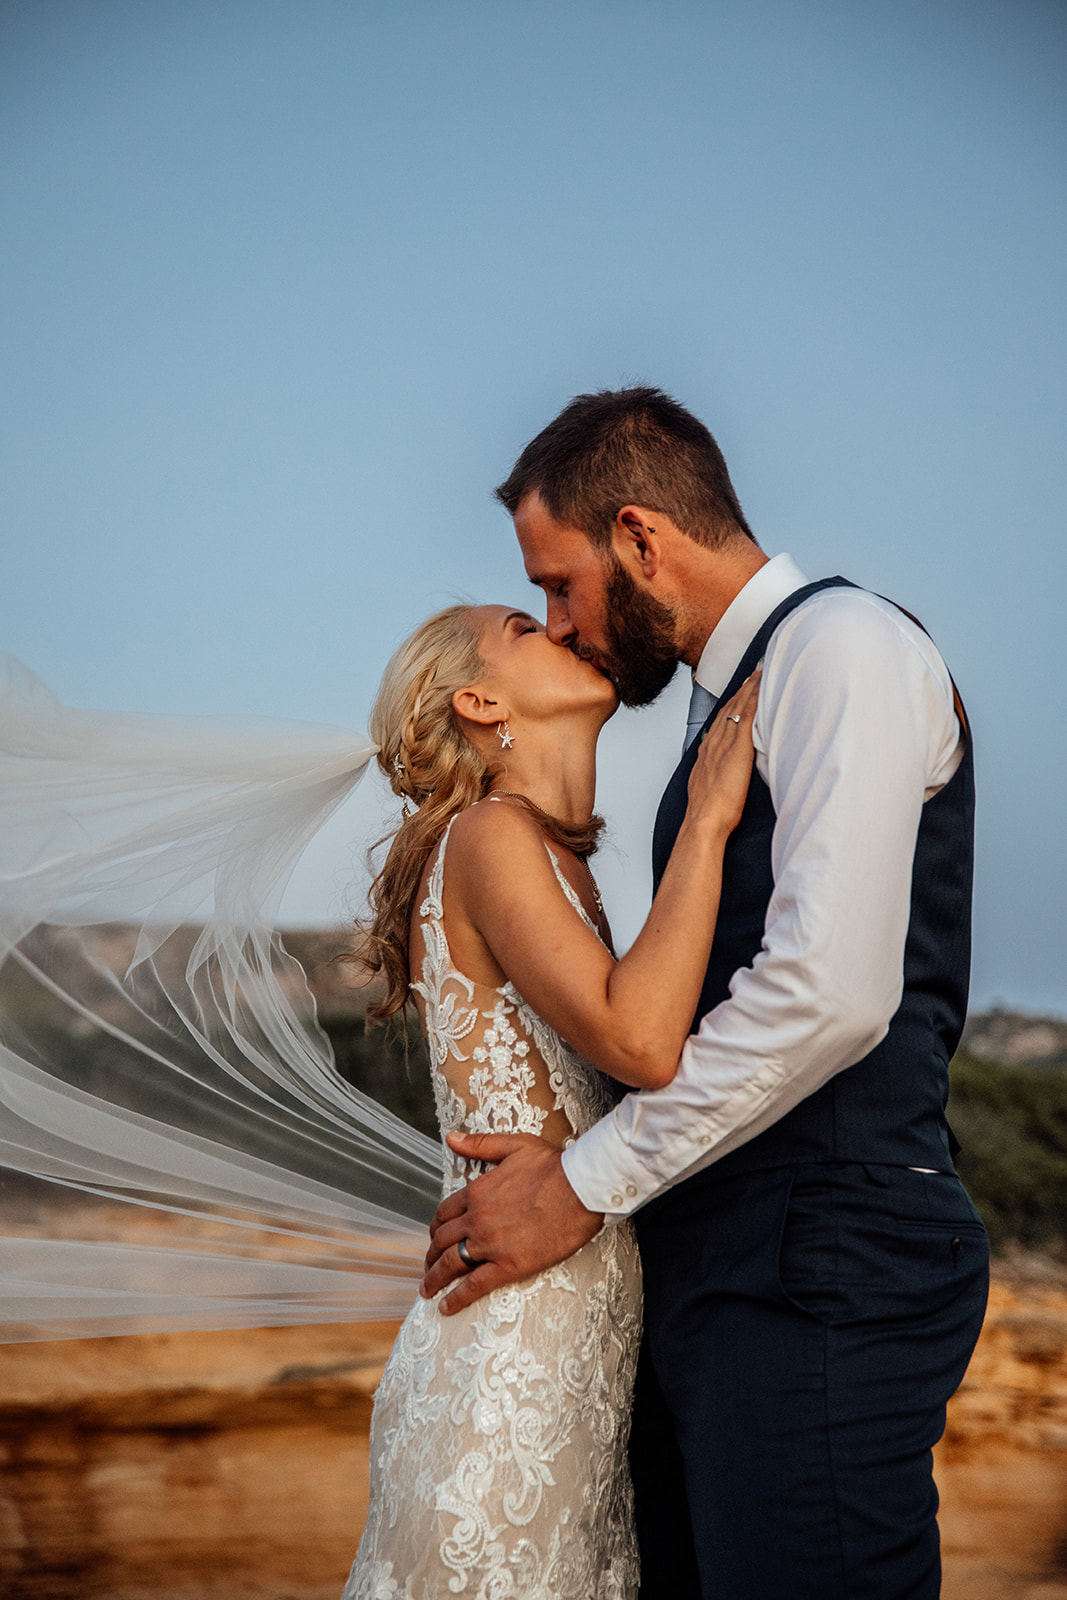 After Wedding Shooting Mallorca - Paar tanzt am Meer und den Klippen - Schleier weht im Wind 